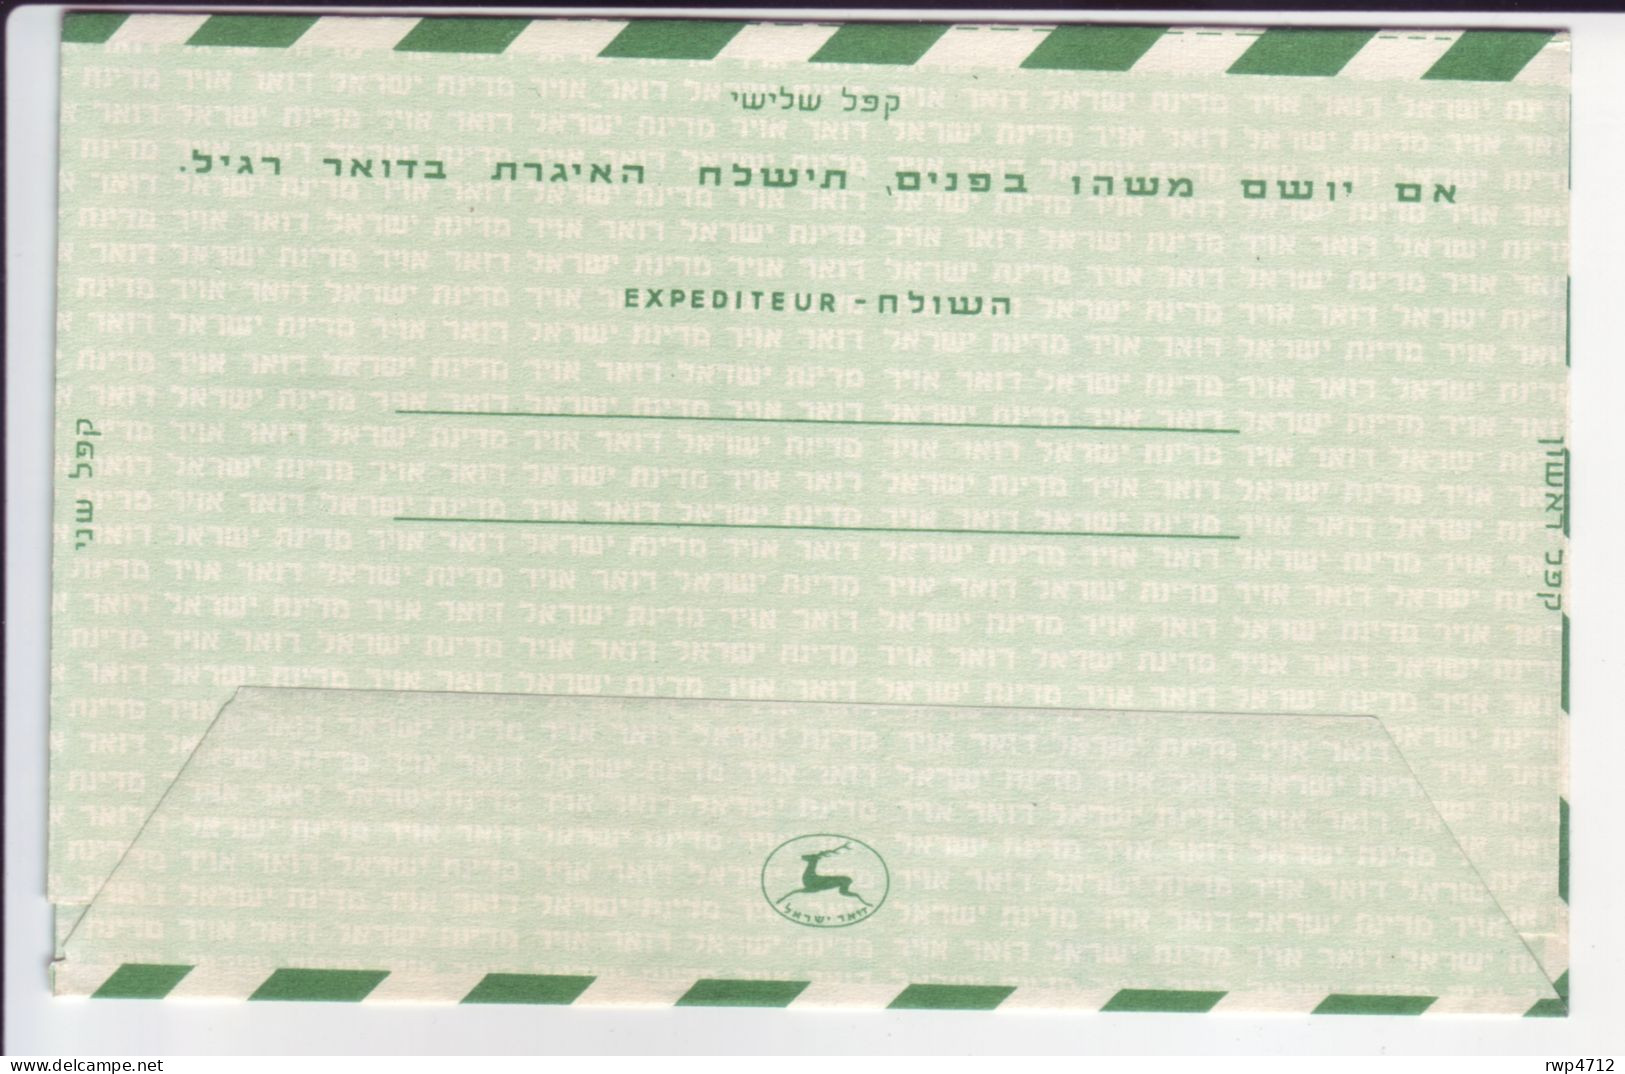 ISRAEL     Aerogramme  250 Pr. - Poste Aérienne